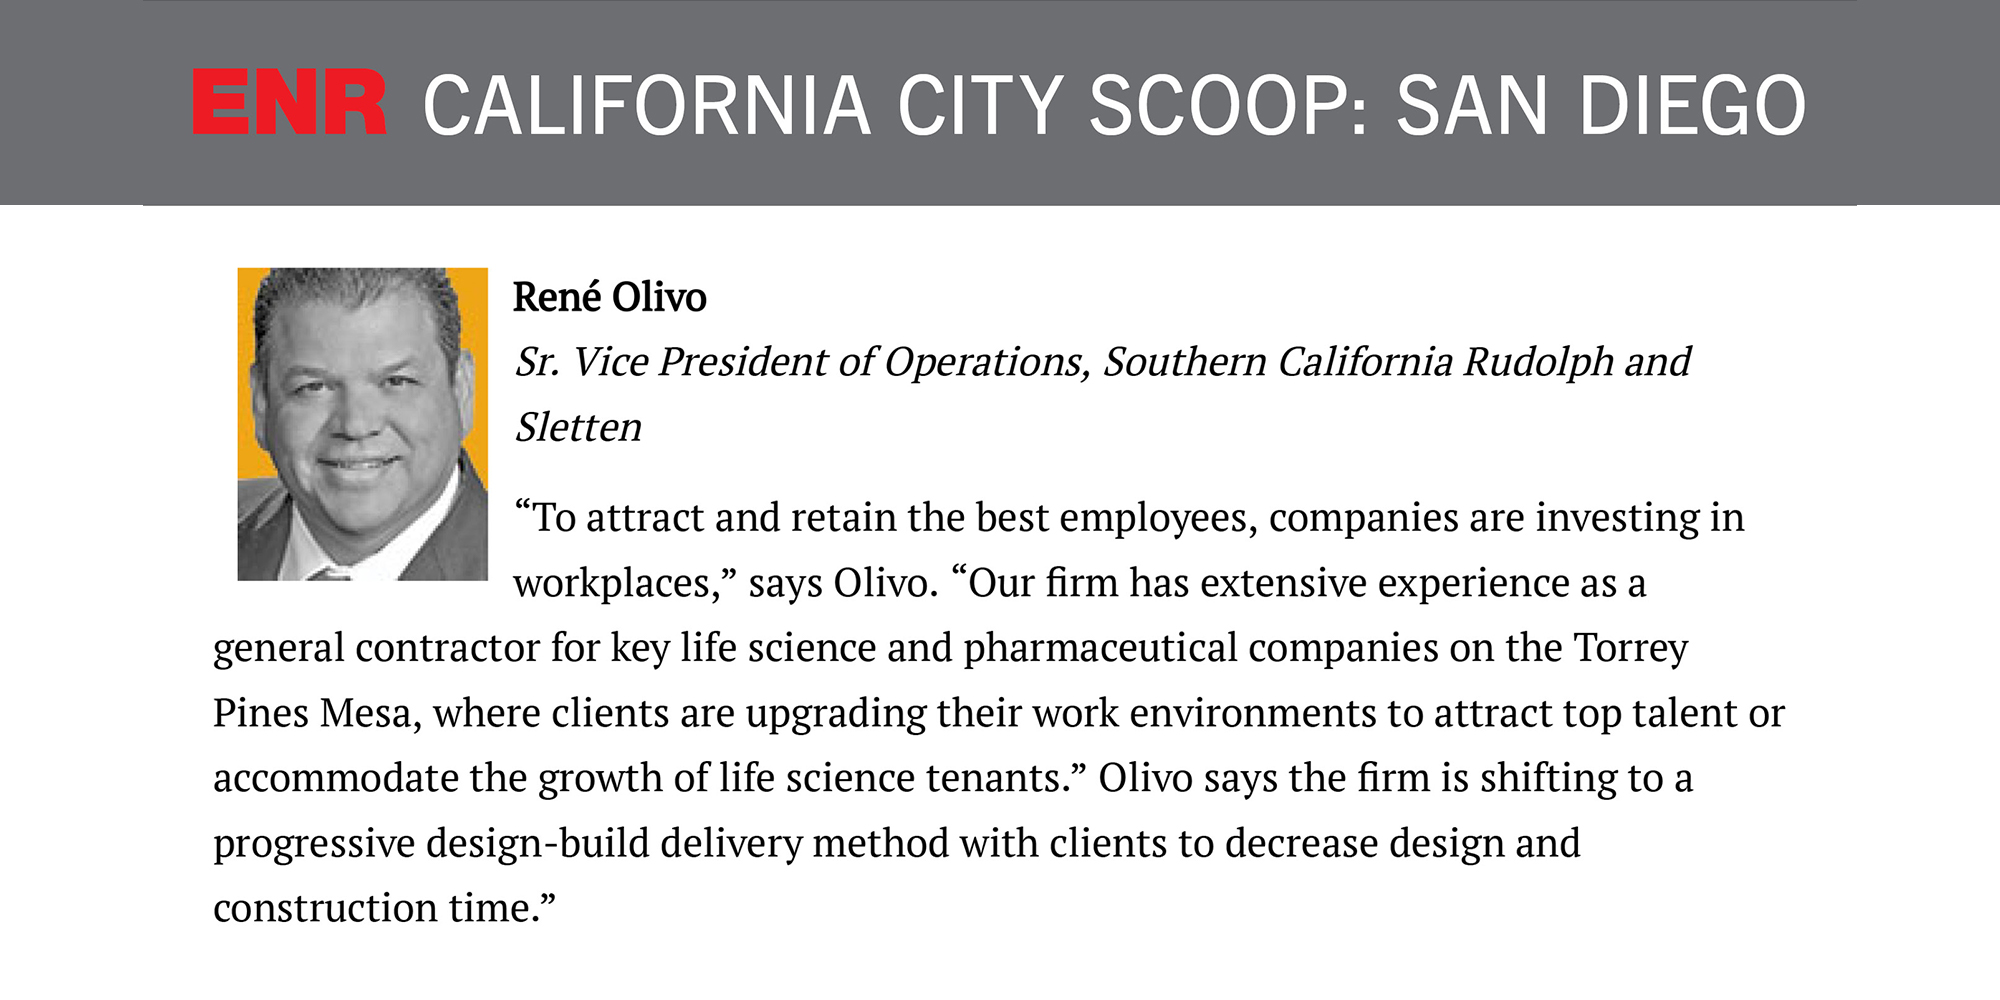 SVP Rene Olivo shares San Diego market insights